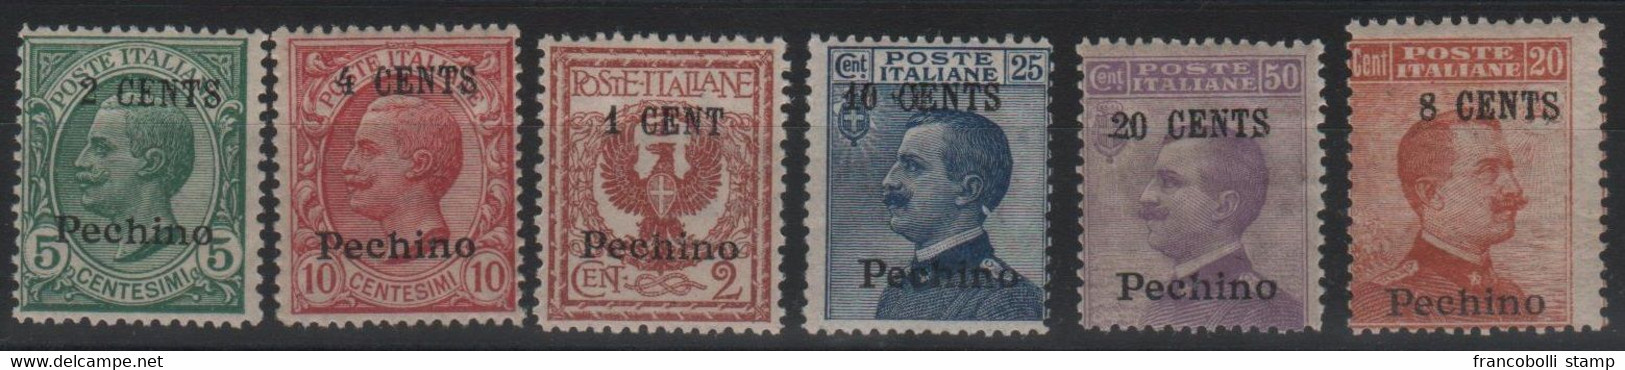 1918-19 Pechino Francobolli D'Italia Sopr. Serie MNH +++ - Pechino